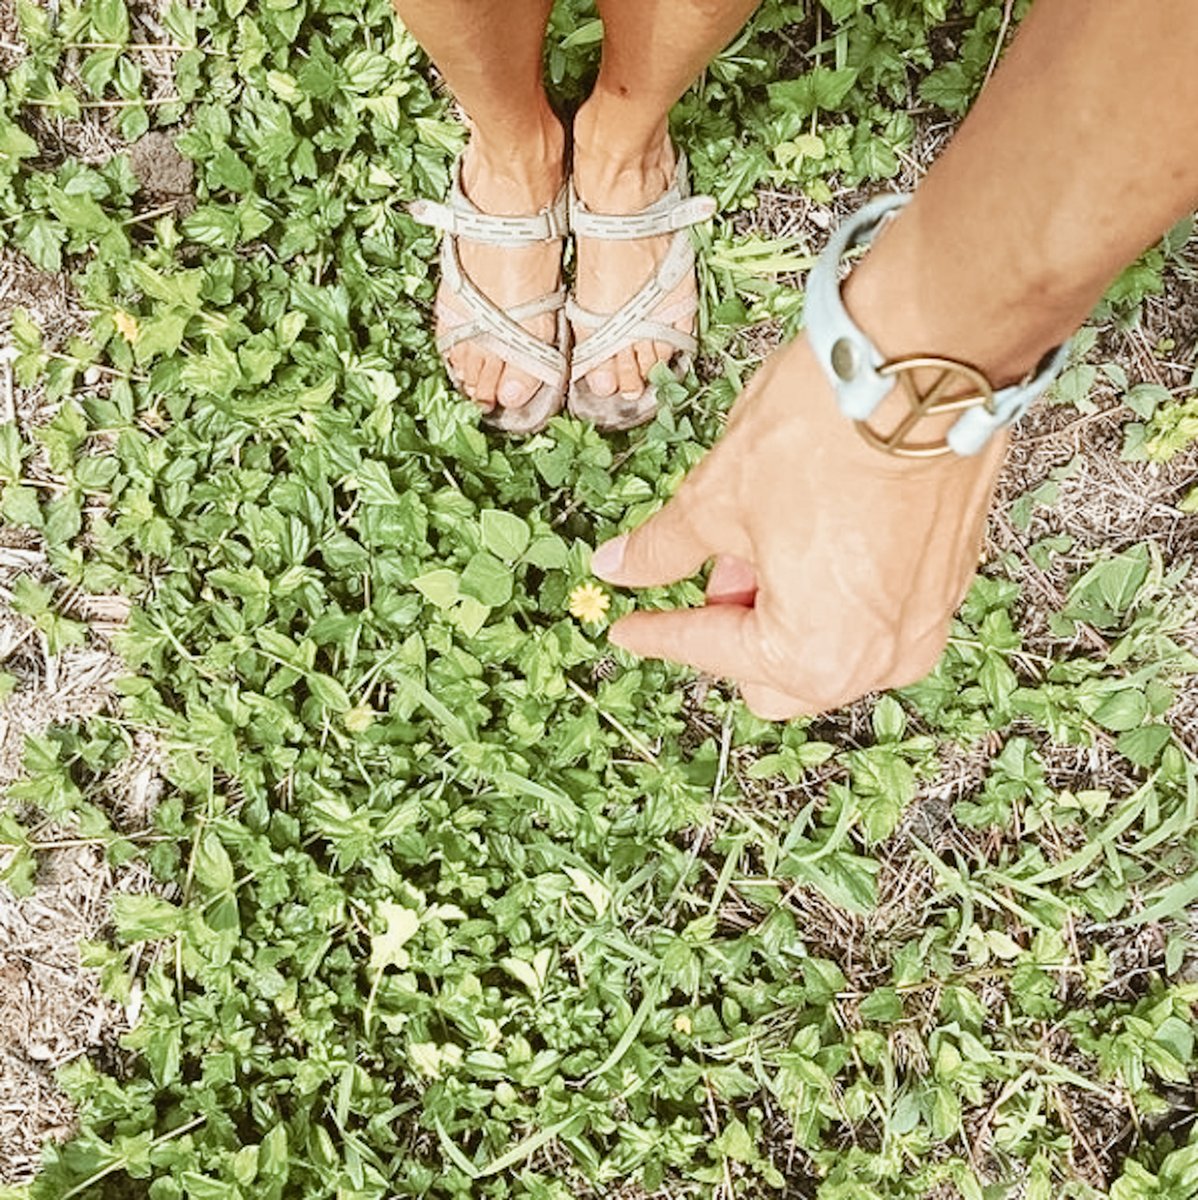 'If you walk in the footprints of others, you won't make any of your own.'🦋 
.
.
.
.
#GivingBracelets #GivingIsLiving #boho #aesthetic #nature #blog #travelinspo #fashionblog #naturelover #boholifestyle #flowers #styleinspo #inspo